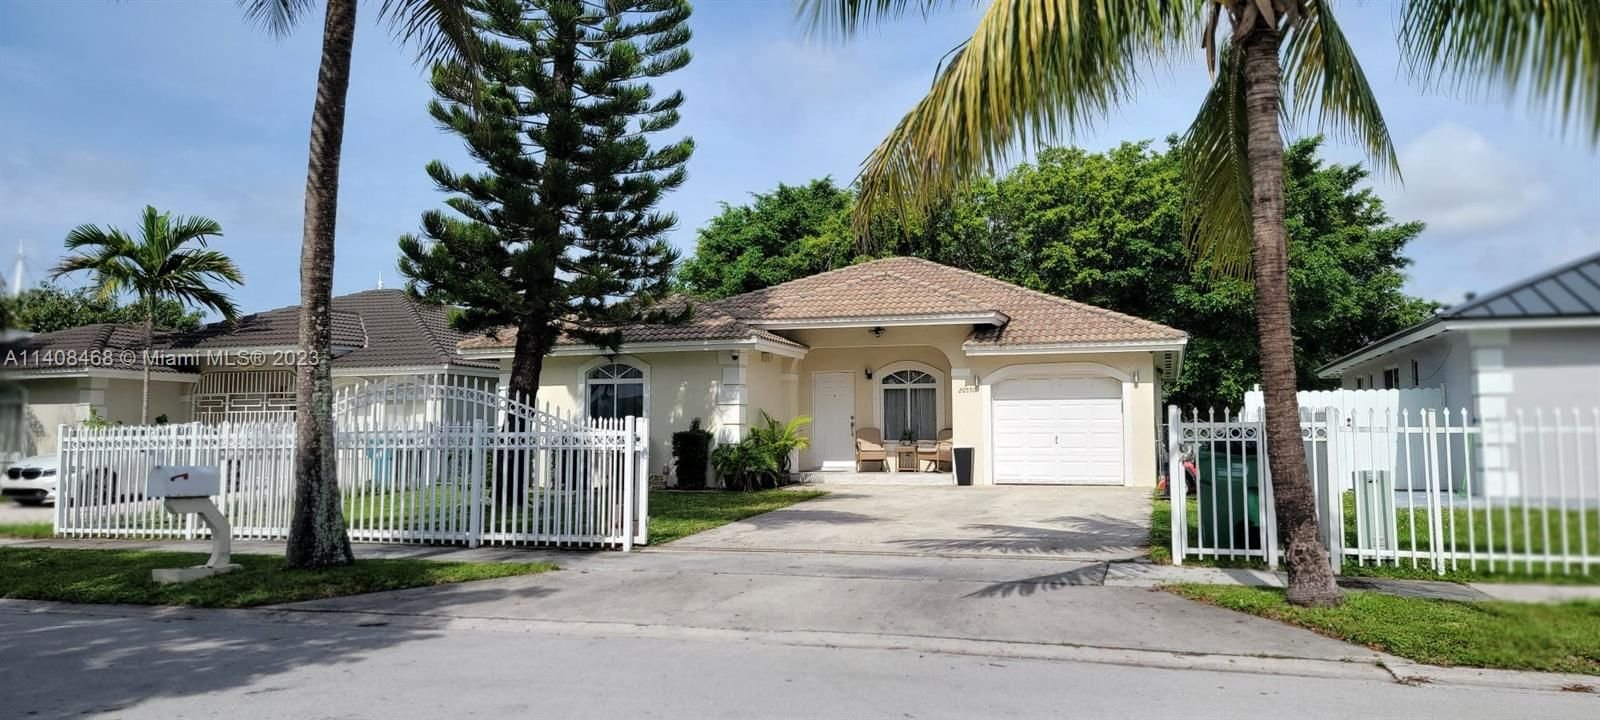 Real estate property located at 20550 17th Ave, Miami-Dade County, Miami Gardens, FL